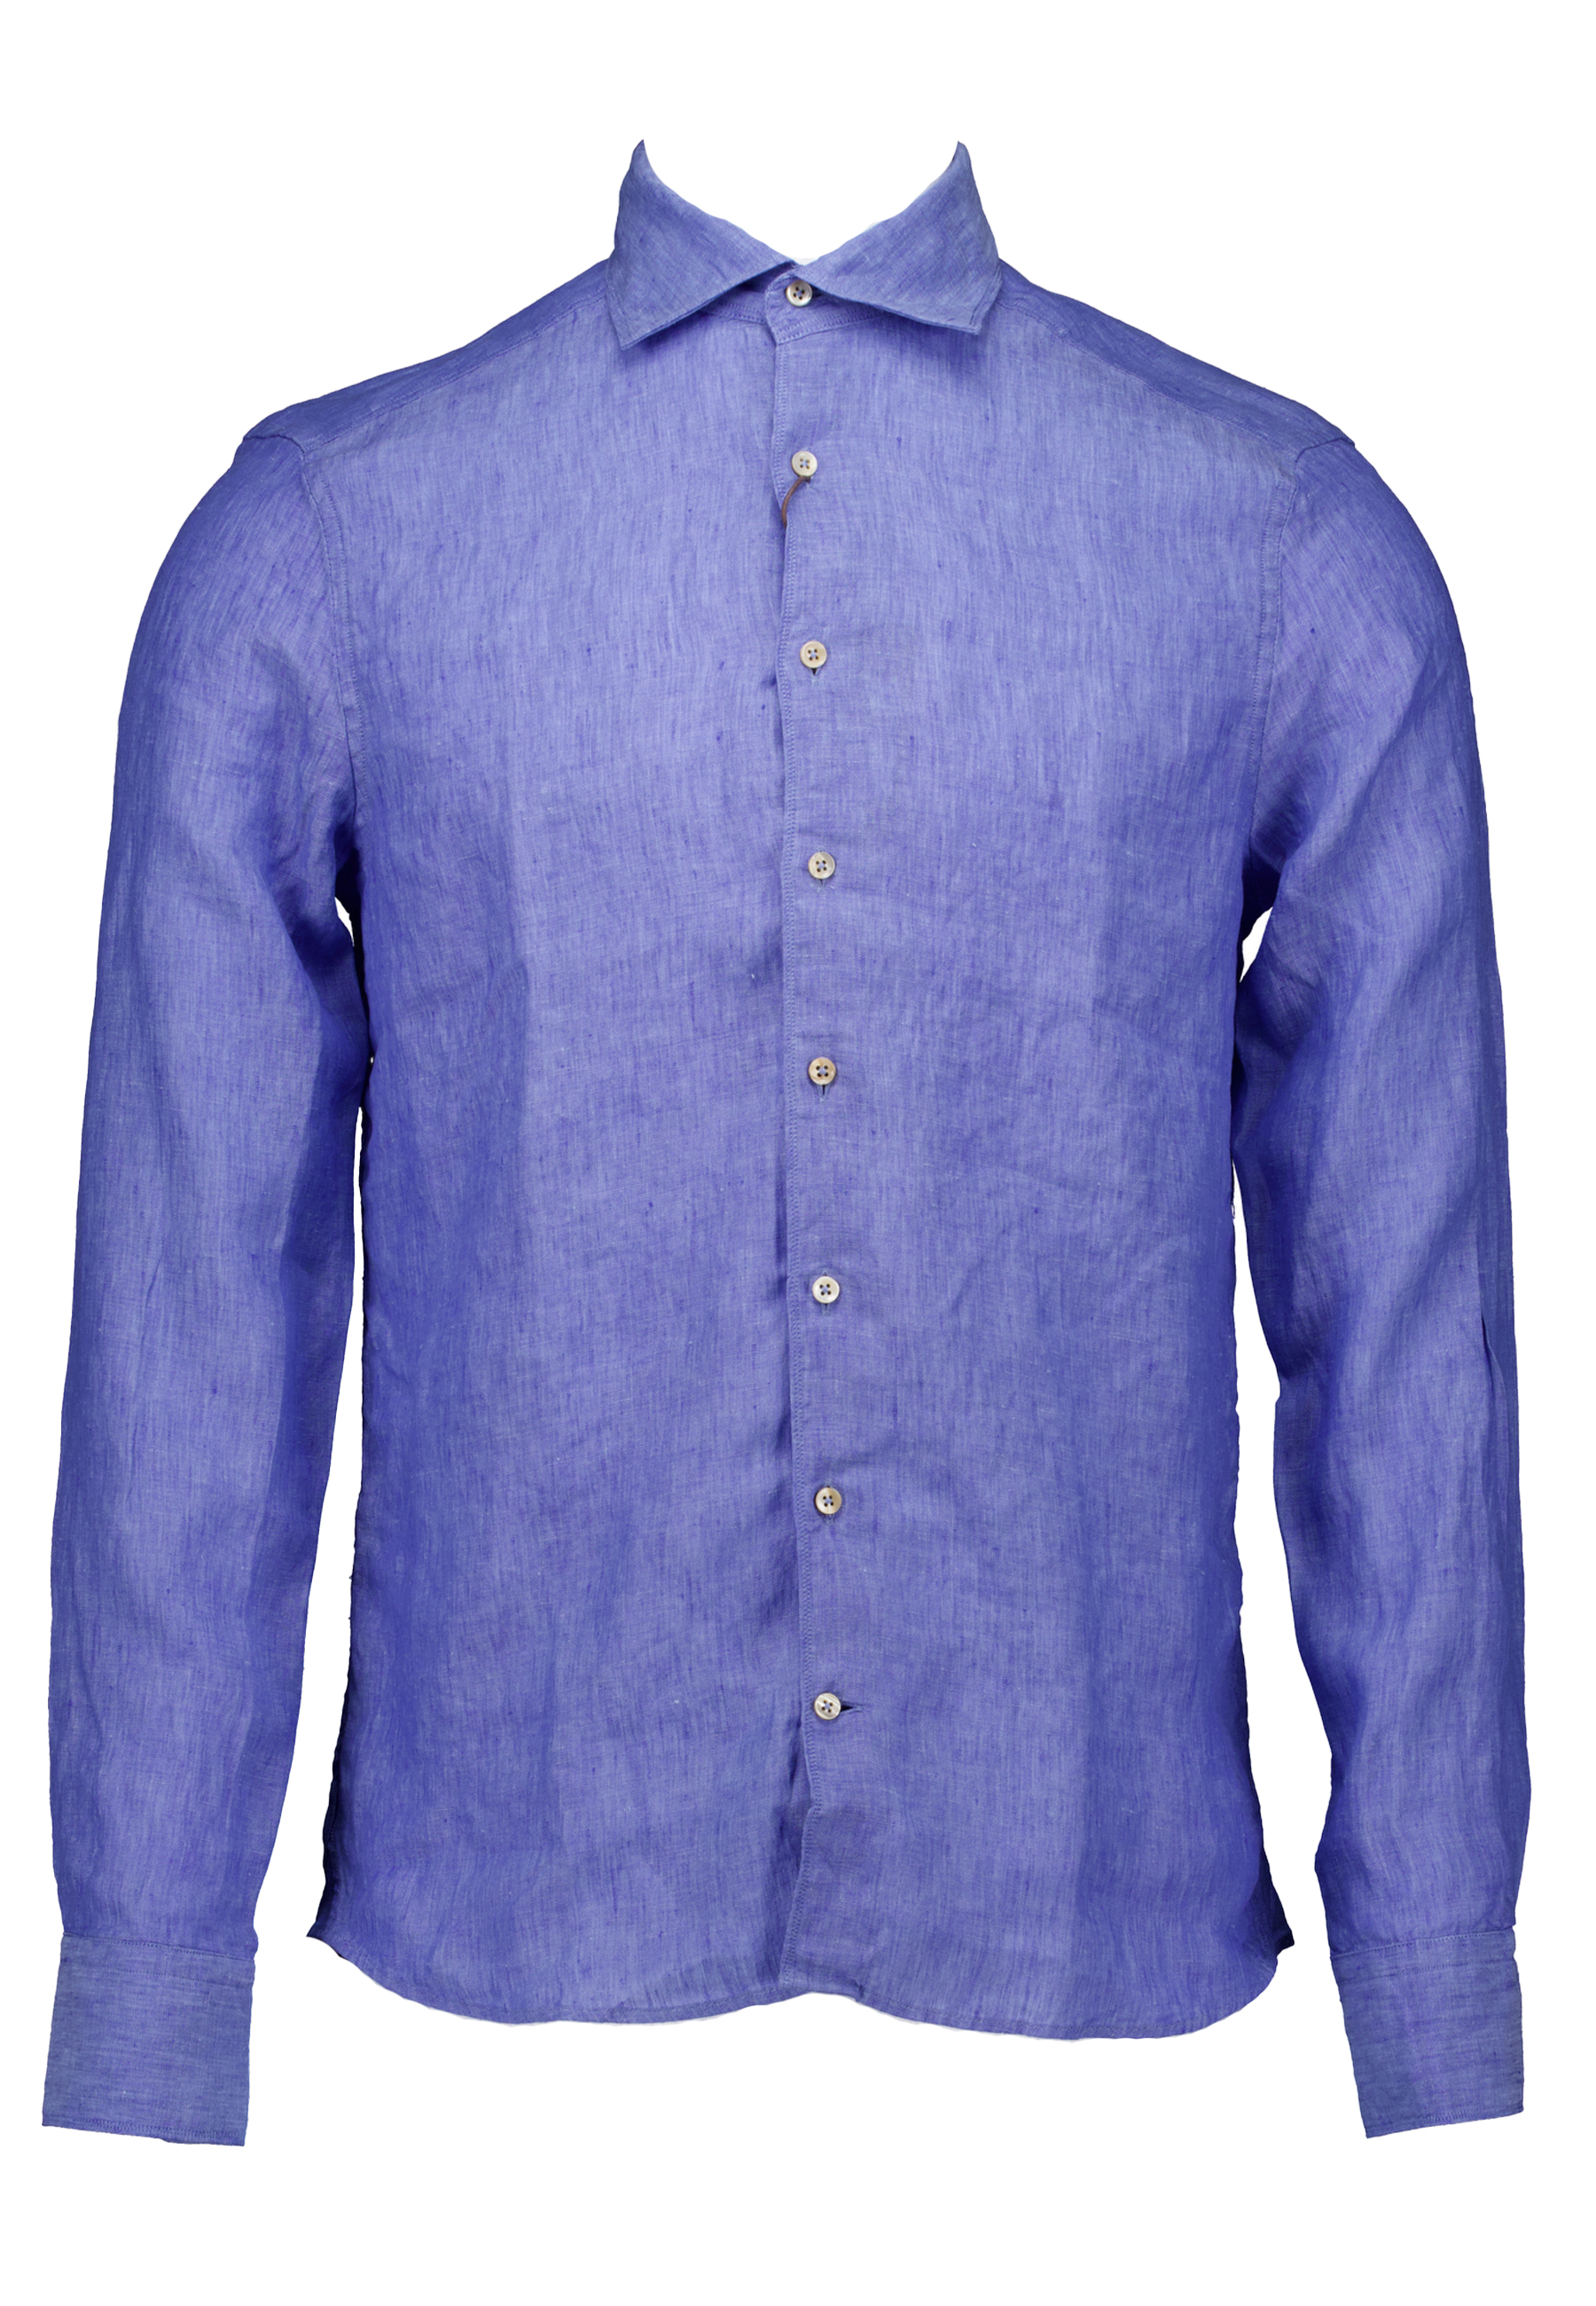 Overhemd Blauw Slimline c72 rc lange mouw overhemden blauw